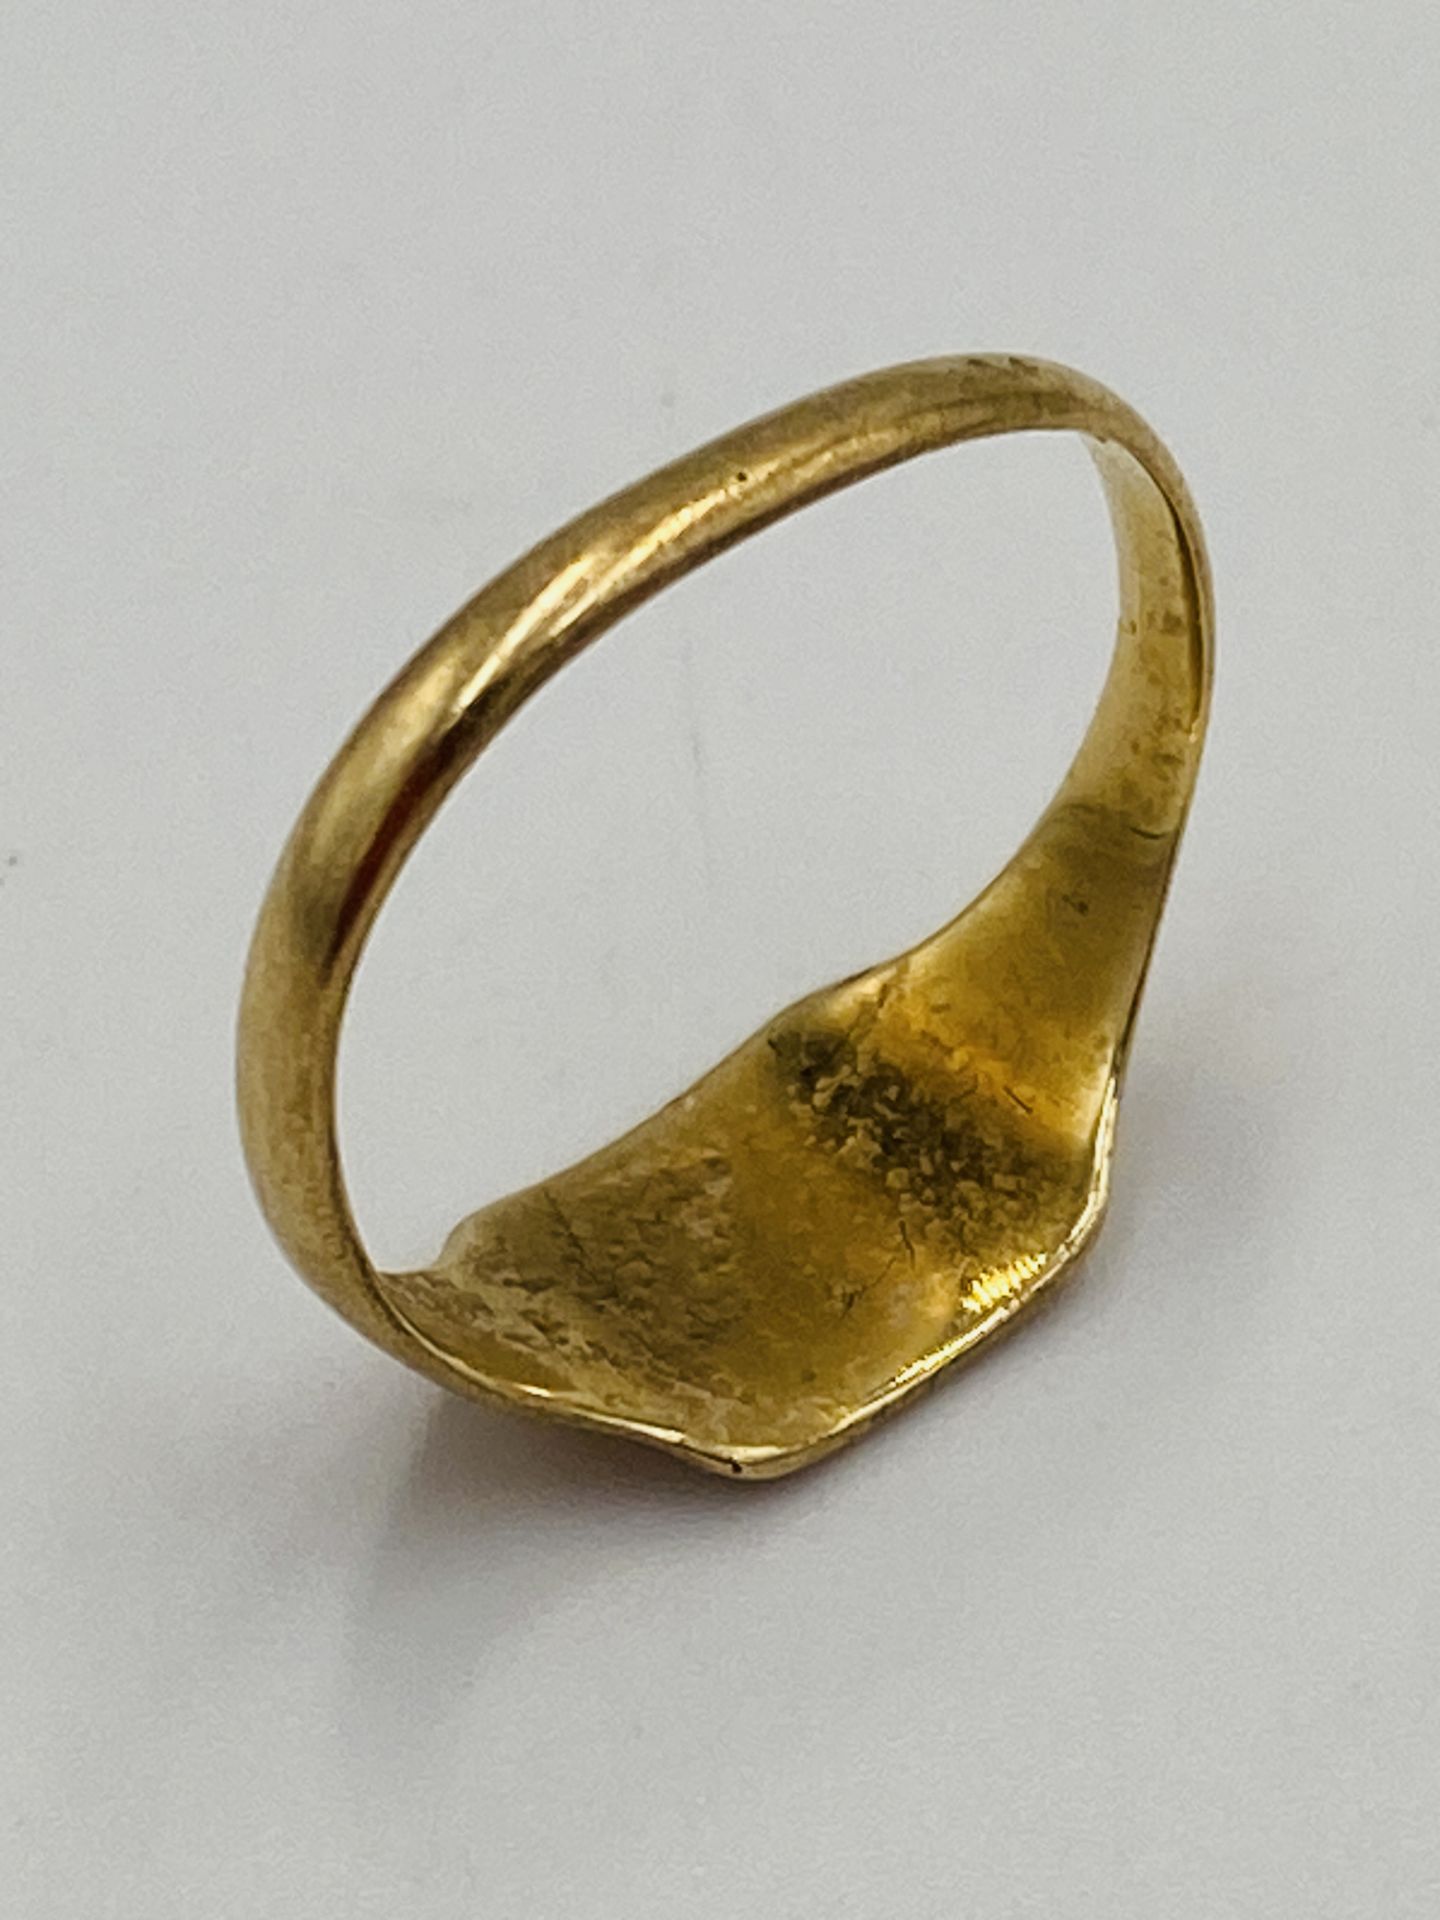 9ct gold signet ring - Image 2 of 5